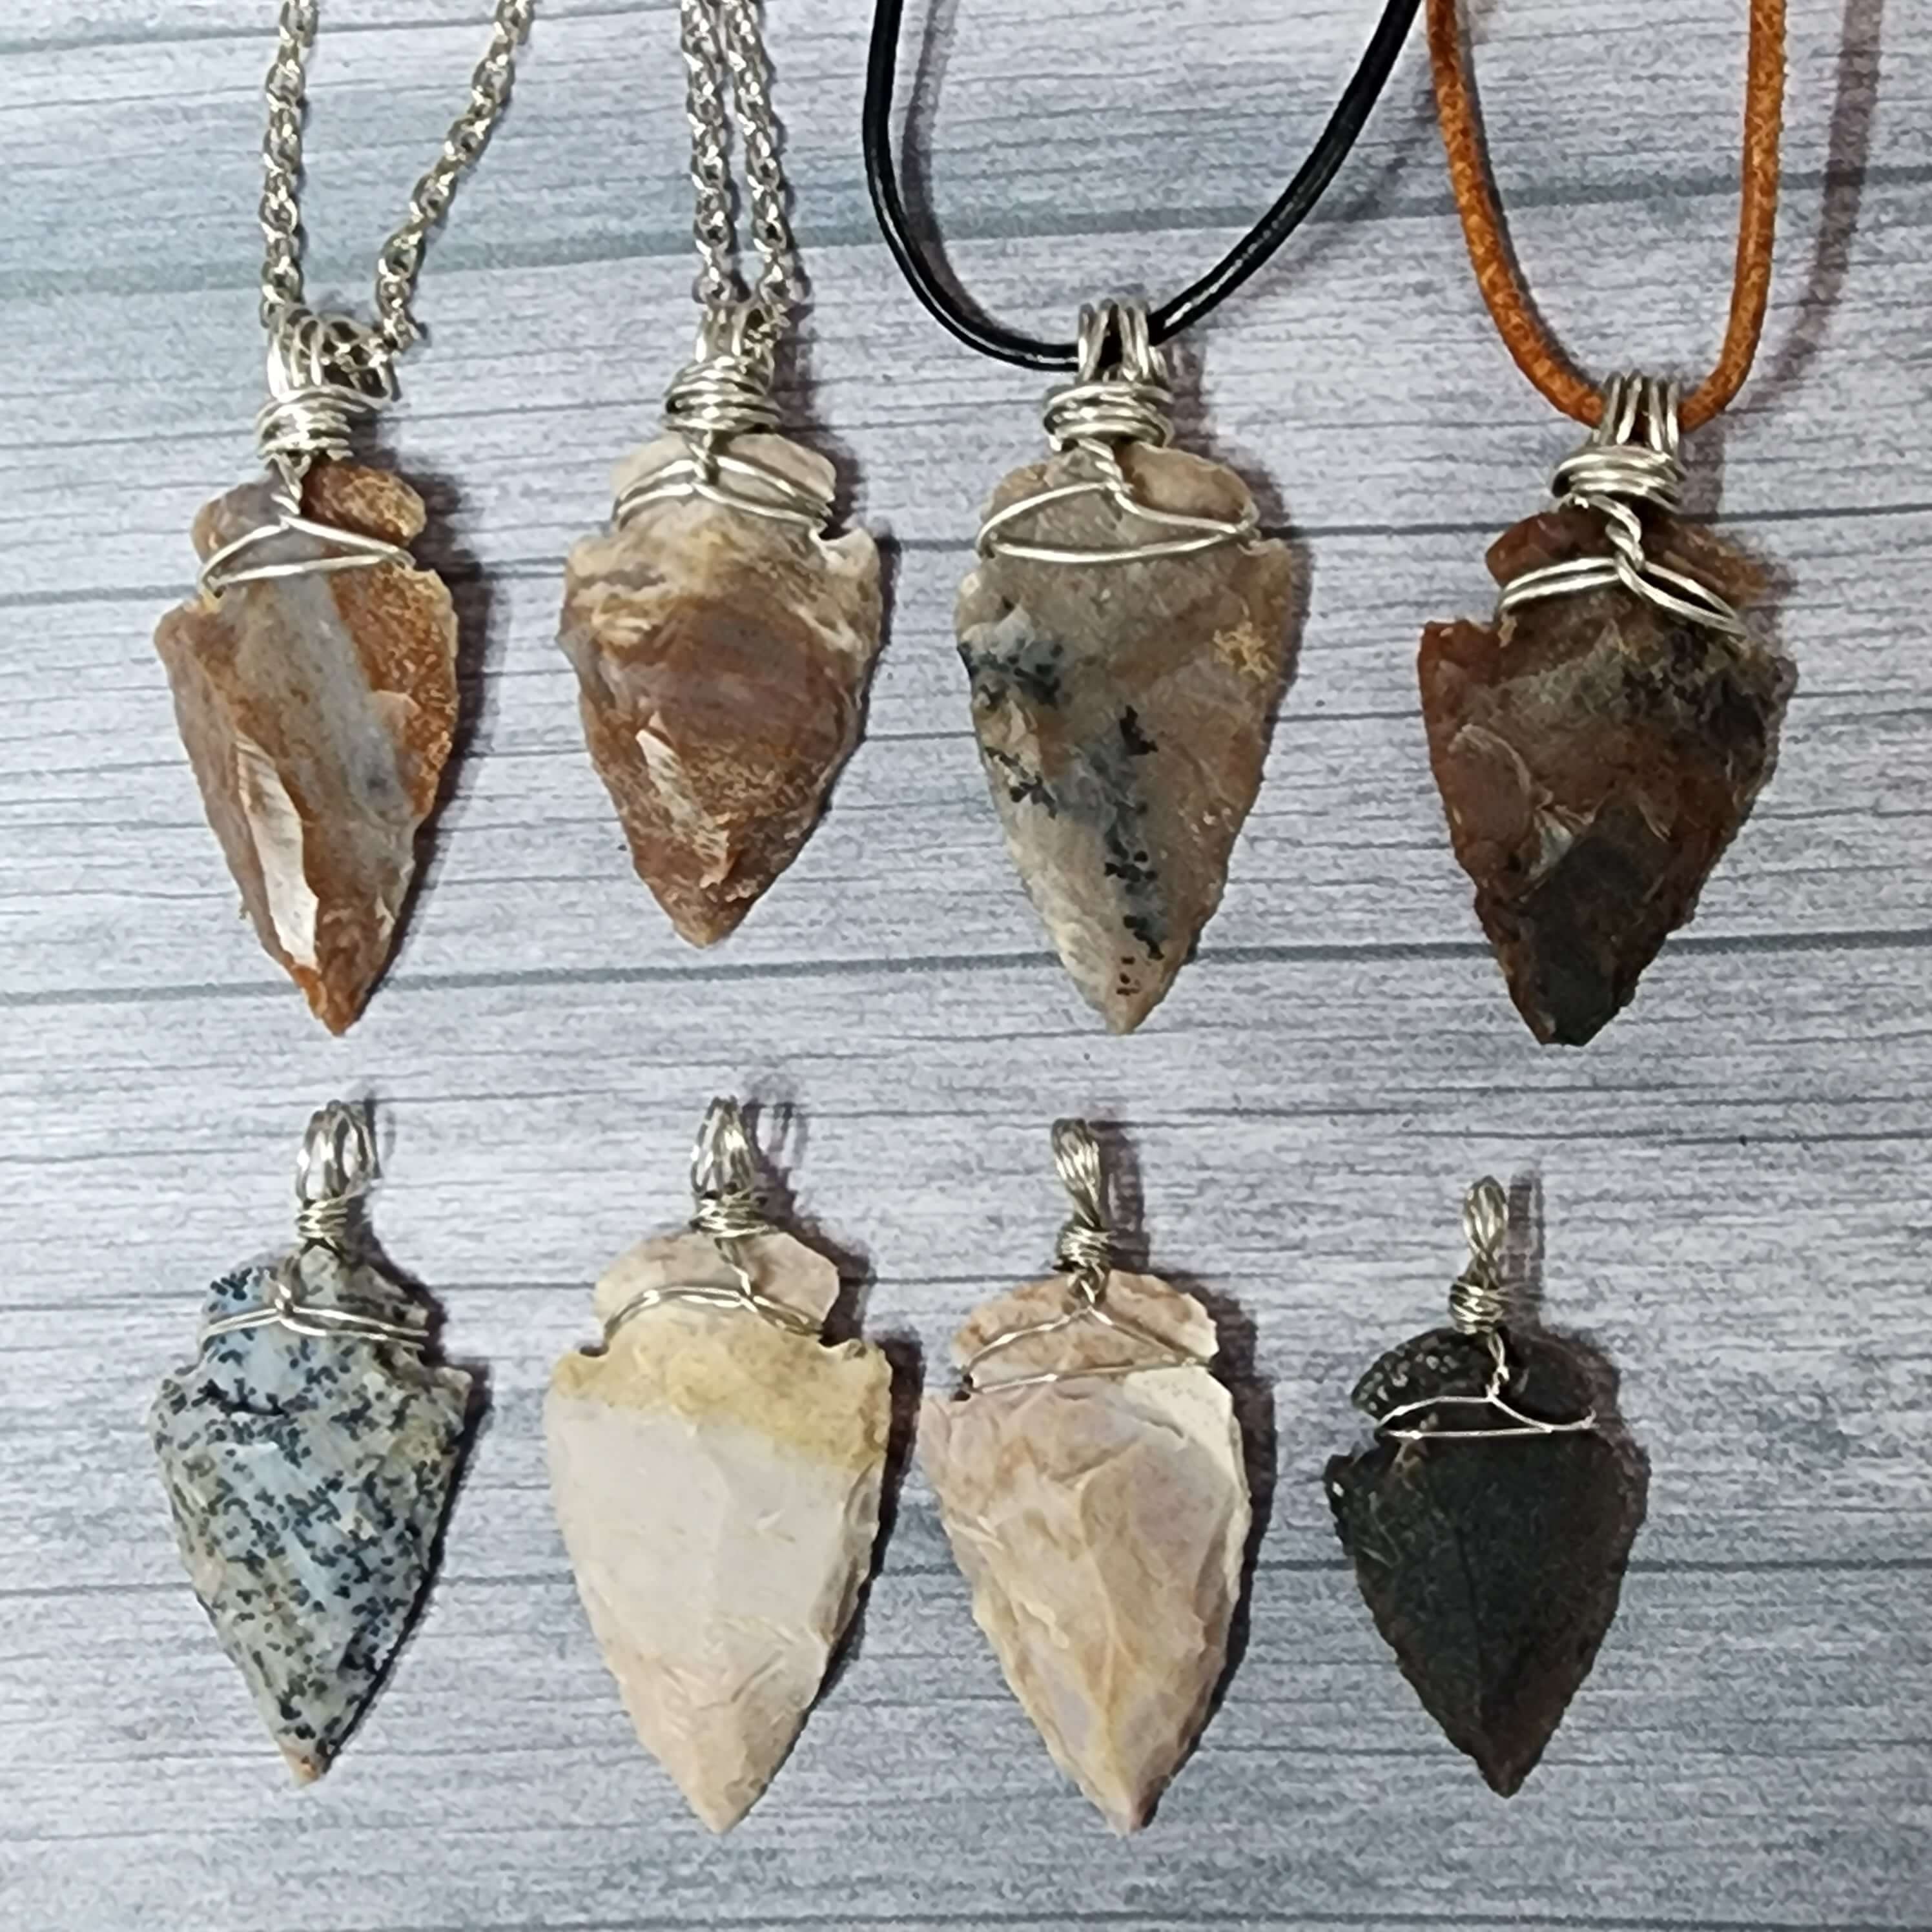 Authentic Creek Indian Arrowhead Necklace | Arrowhead necklace, Necklace,  Unique items products